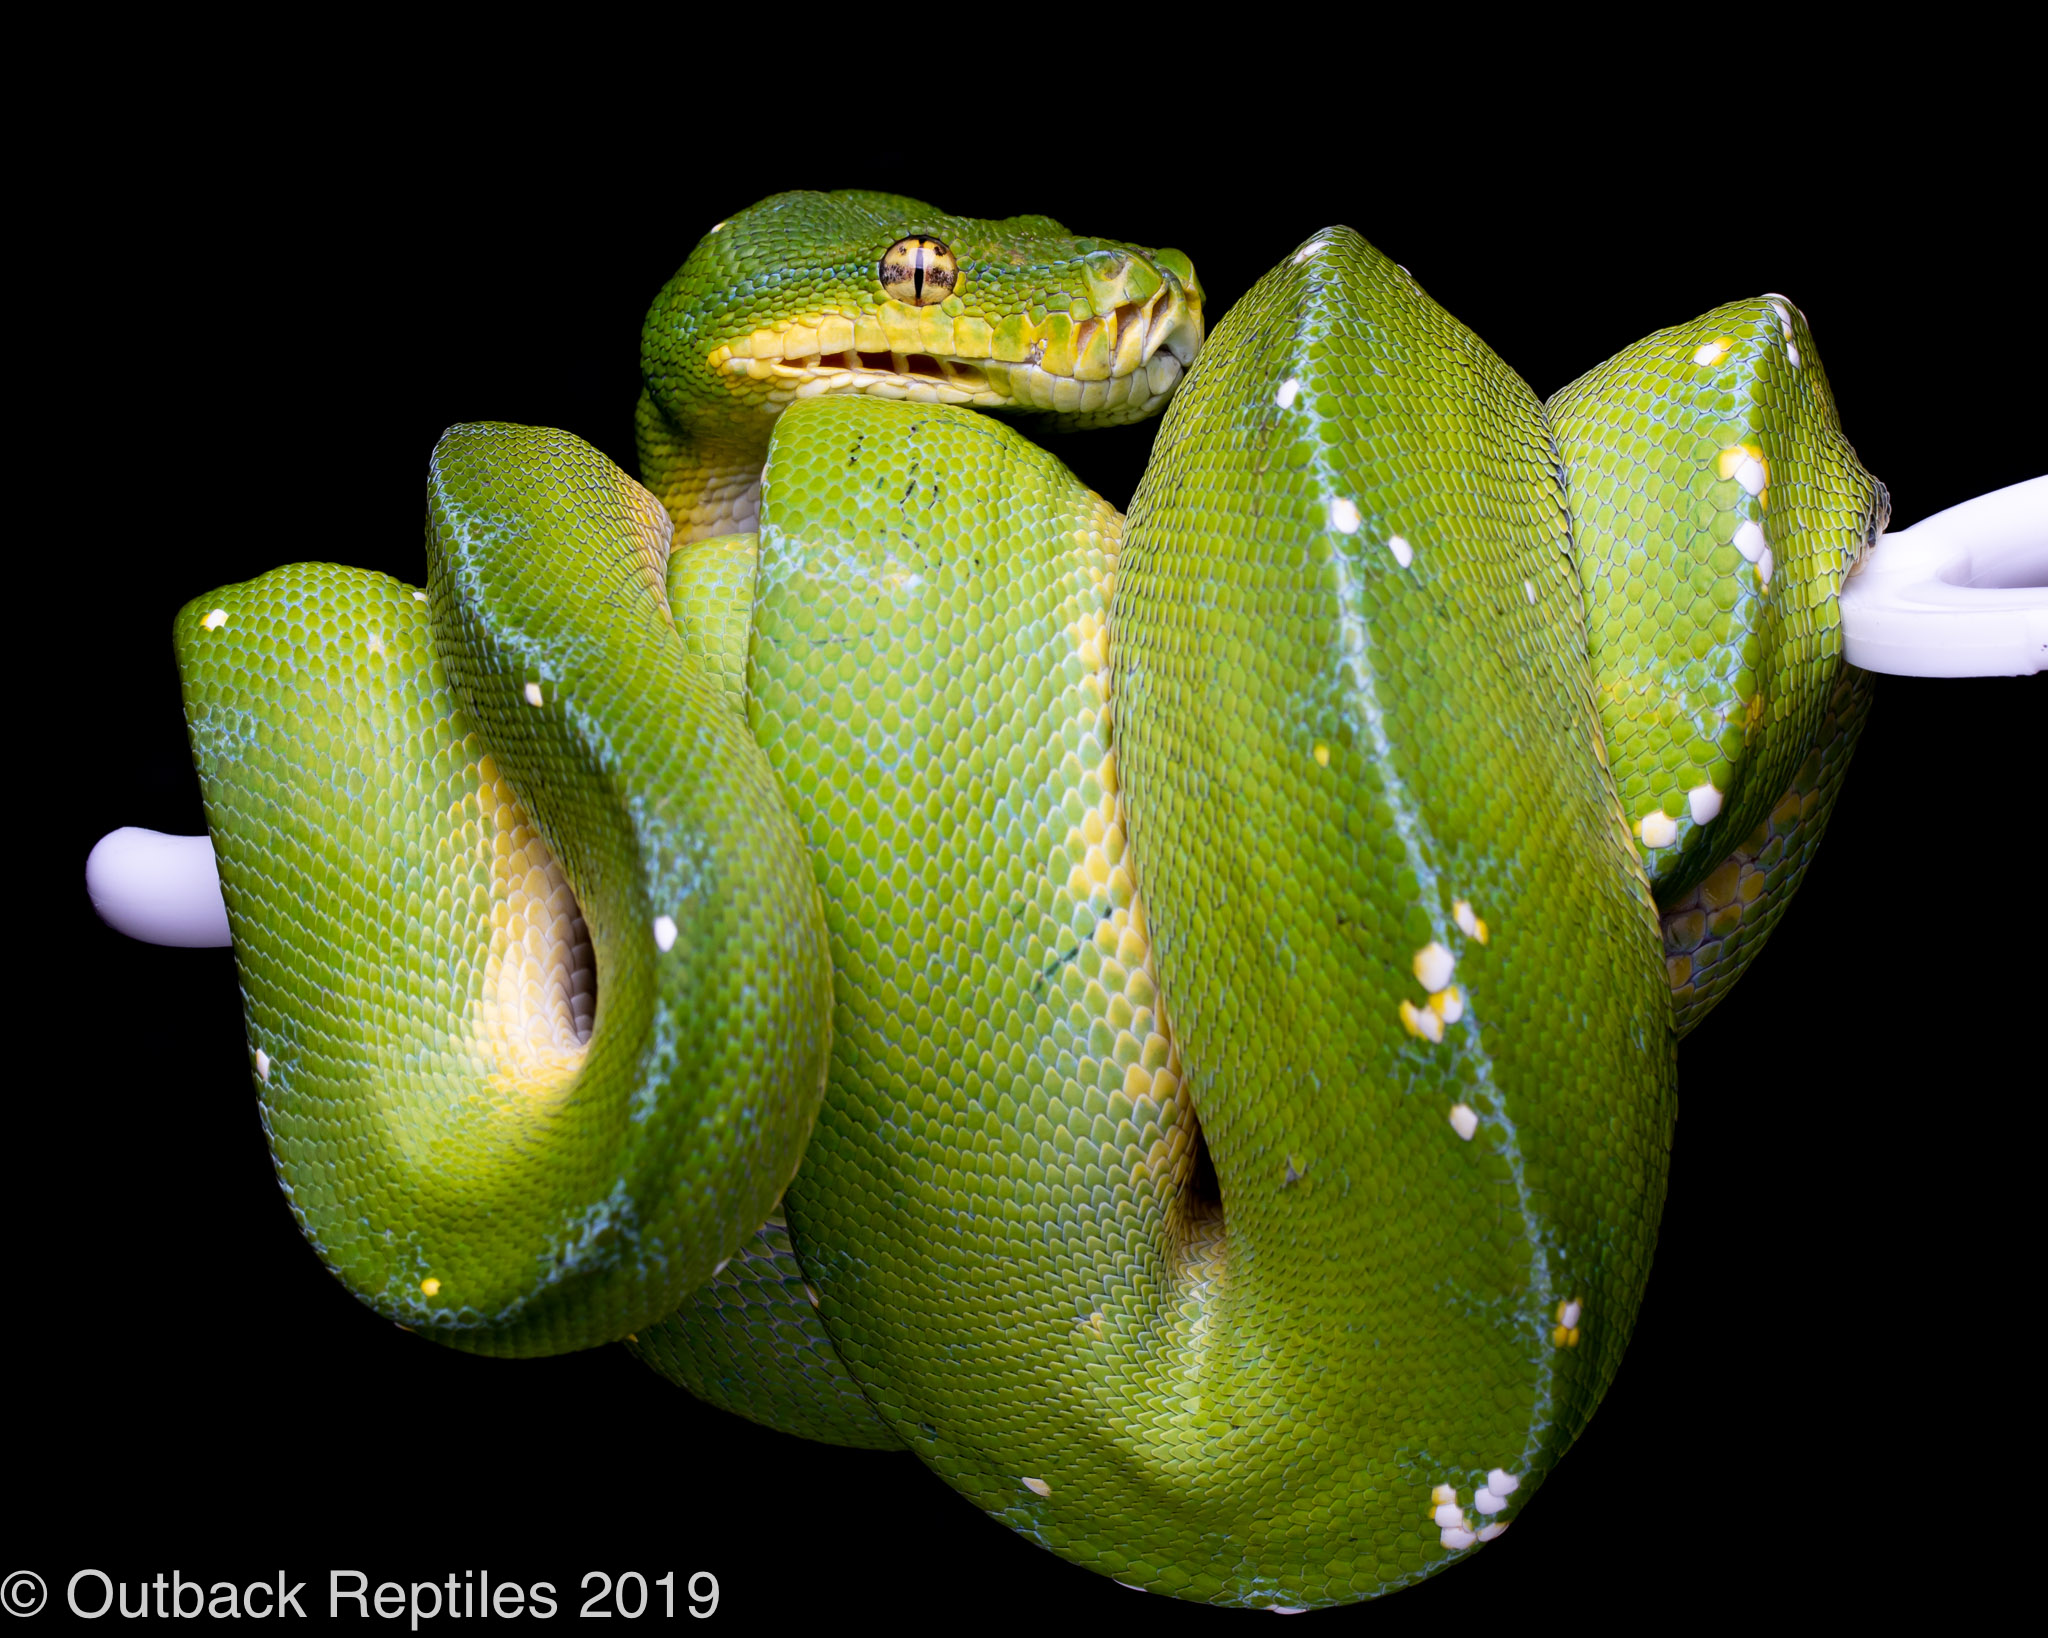 Jayapura Green Tree Python by Outback Reptiles